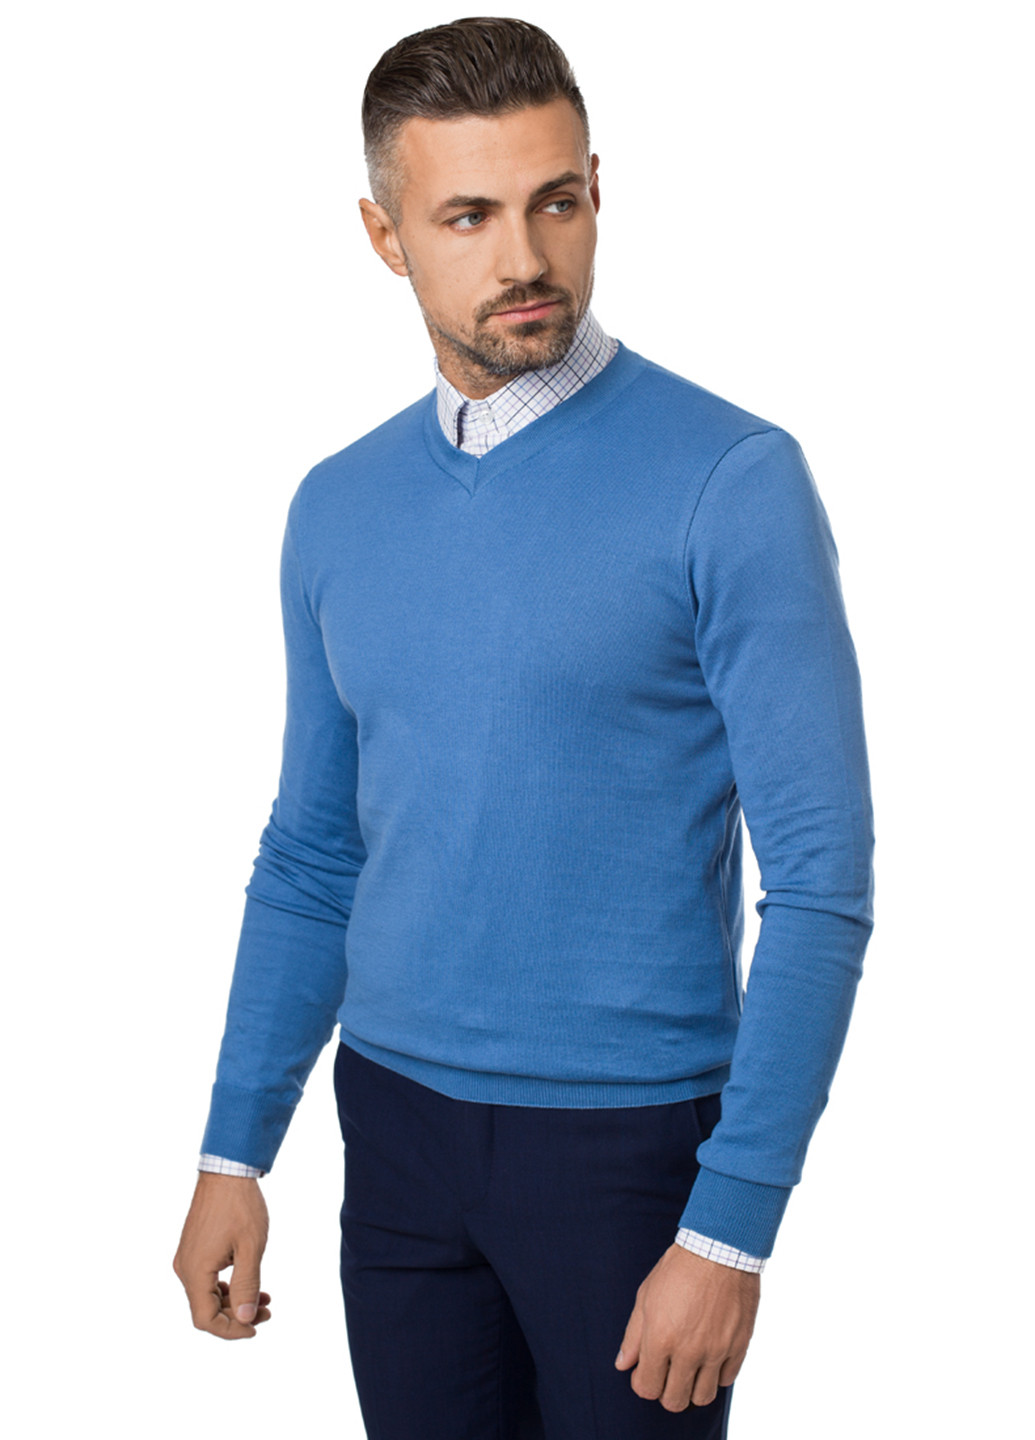 Синий демисезонный пуловер пуловер Arber